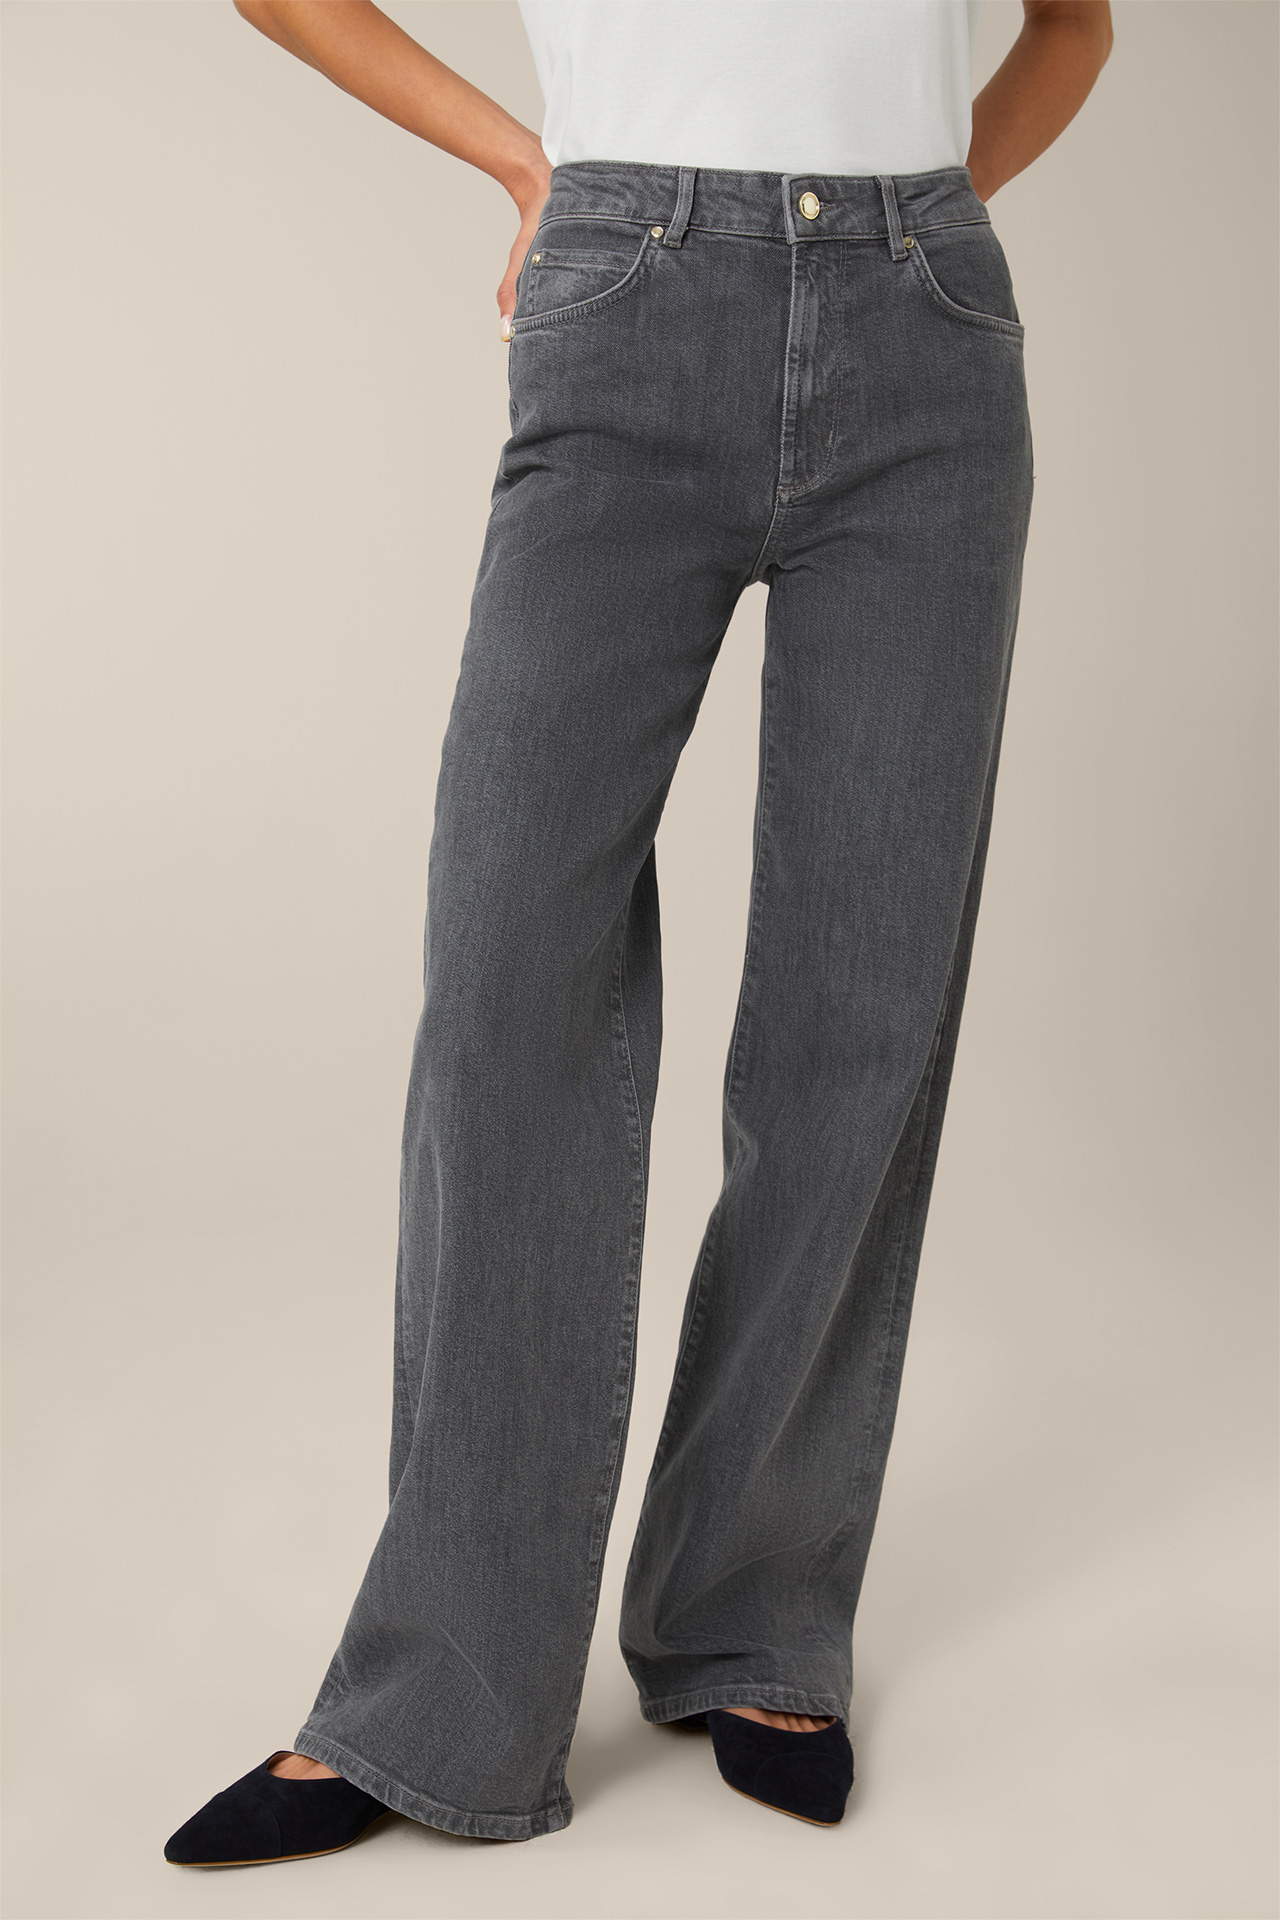 Pantalon en jean Marlene, en gris délavé